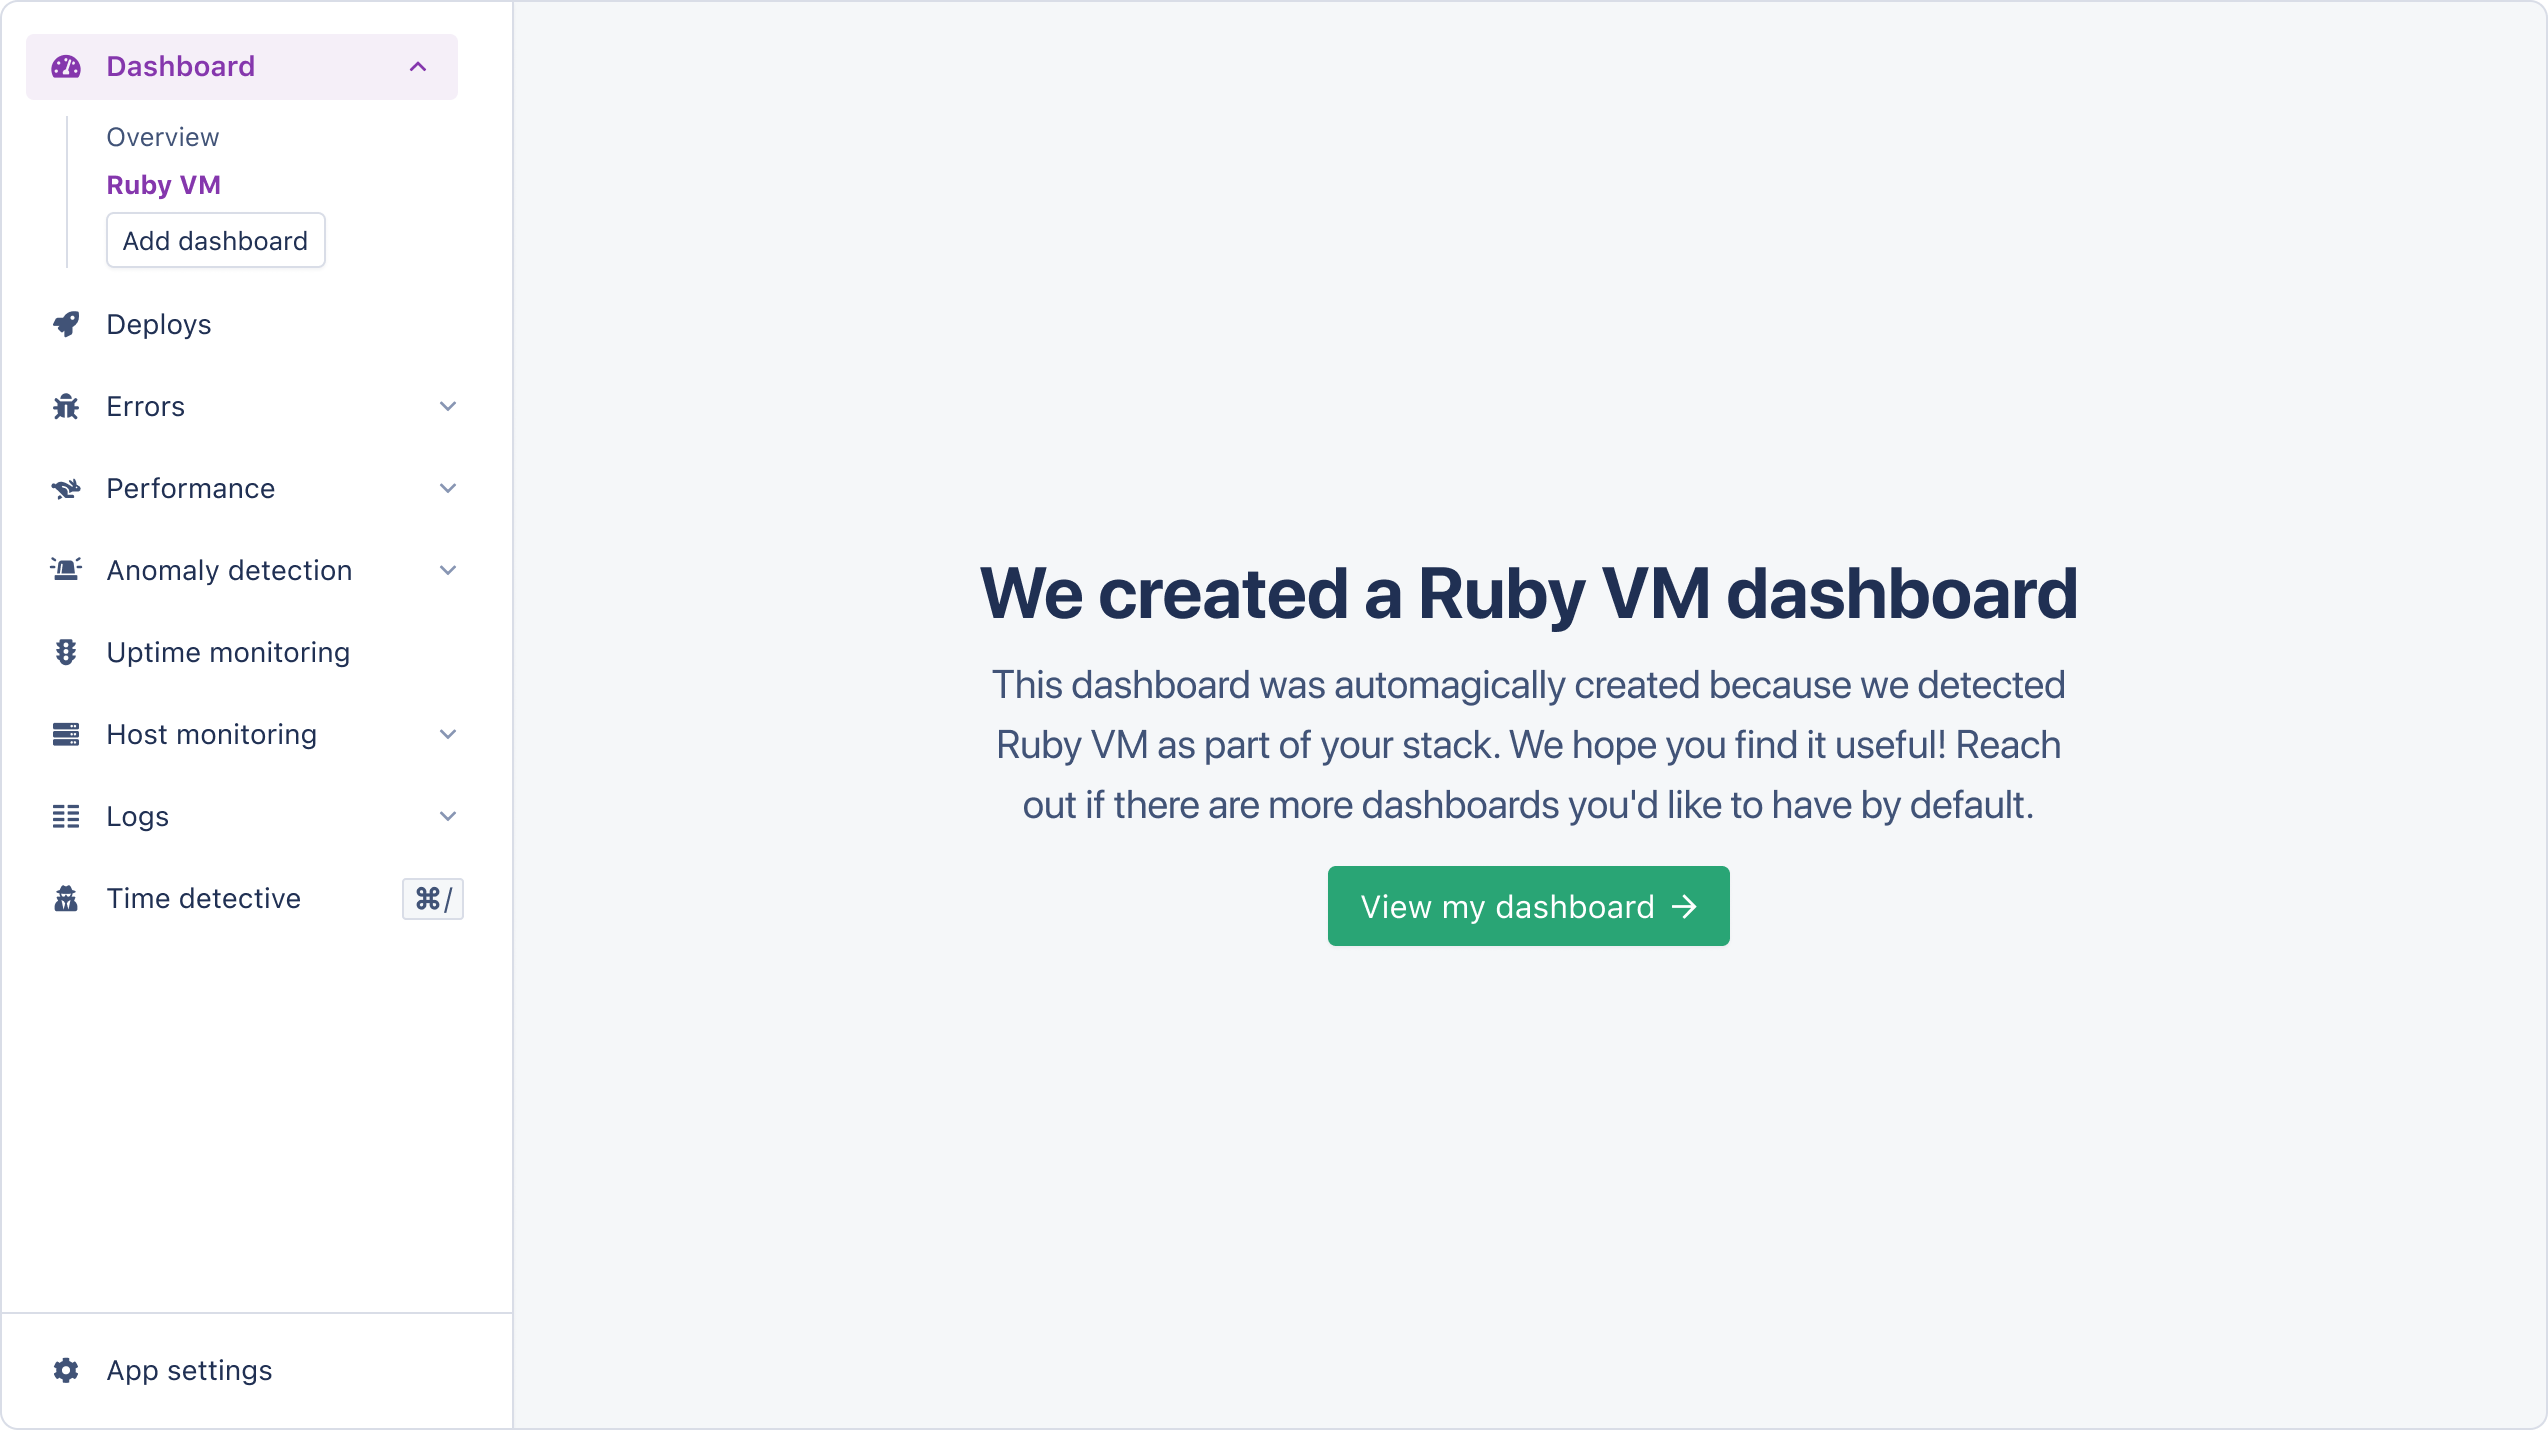 Ruby VM Magic Dashoard creation